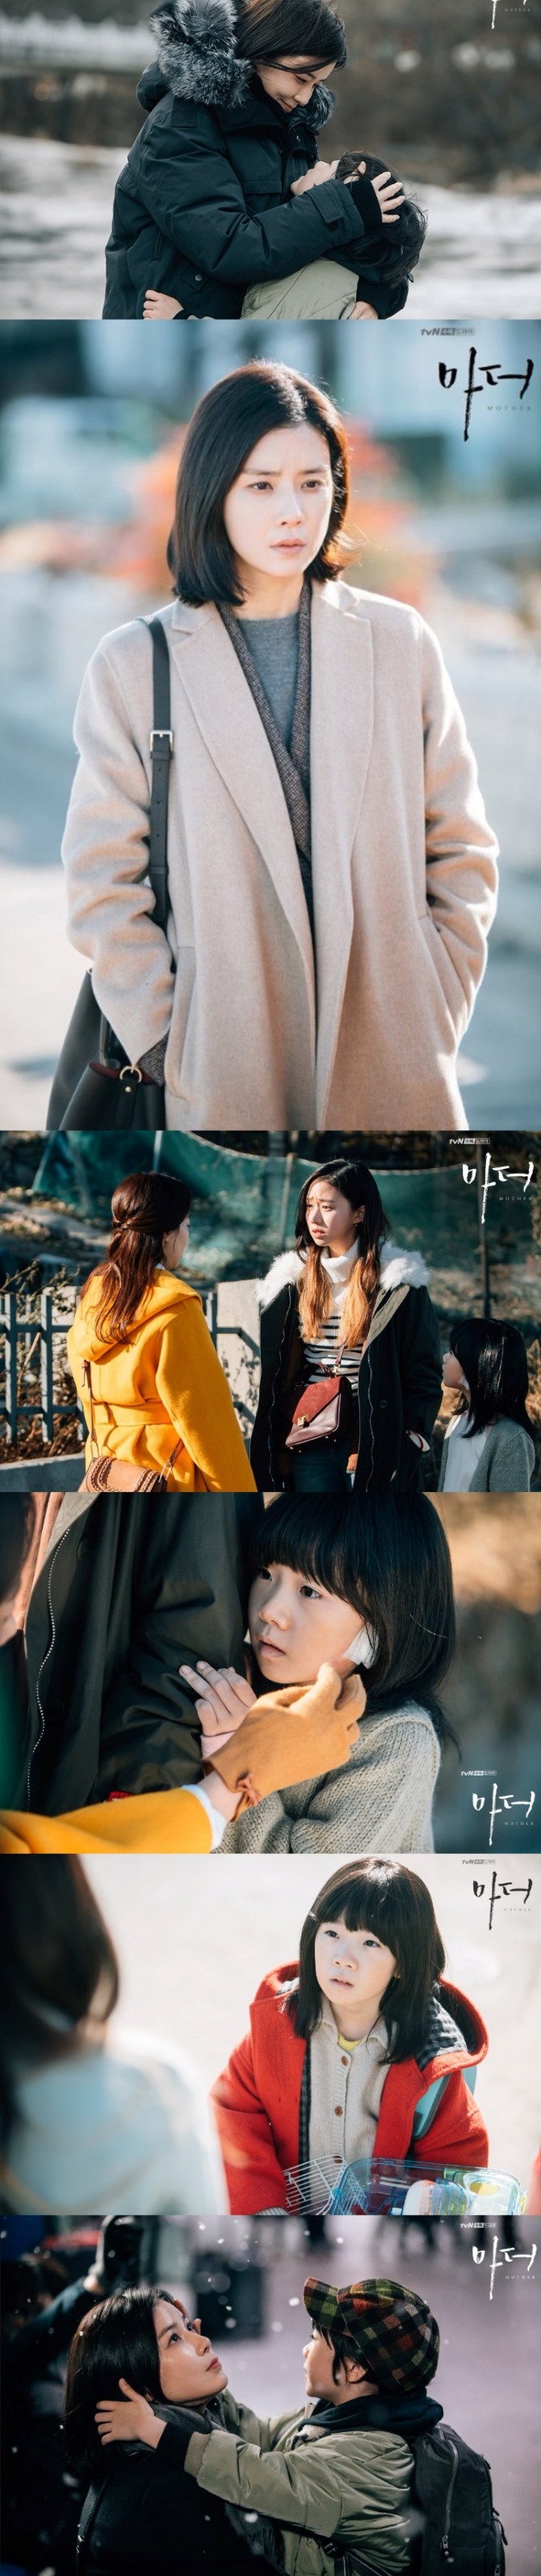 tvN 새 수목드라마 '마더' 에서 교사 강수진 역을 맡은 이보영과 학대받는 소녀 혜나 역의 허율 스틸 컷이 지난 16일 공개돼 기대감을 높이고 있다. 사진=tvN 제공